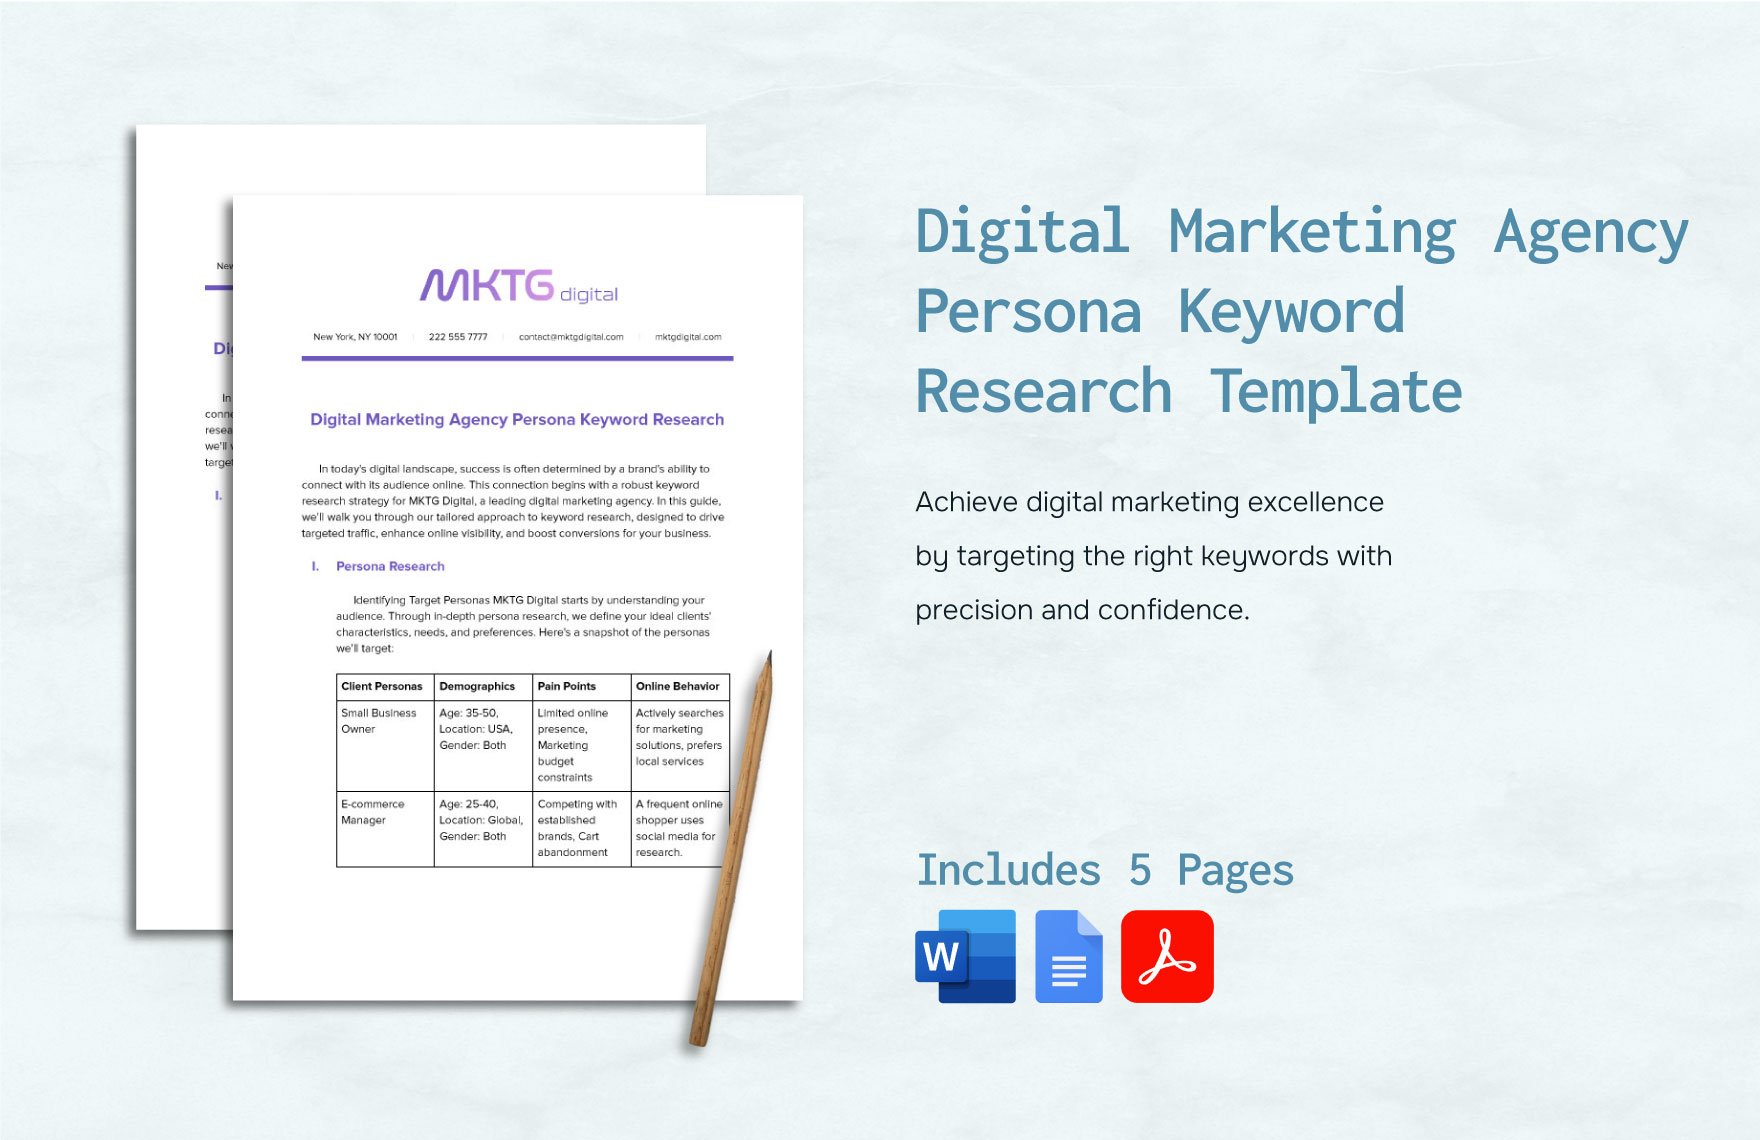 Digital Marketing Agency Persona Keyword Research Template